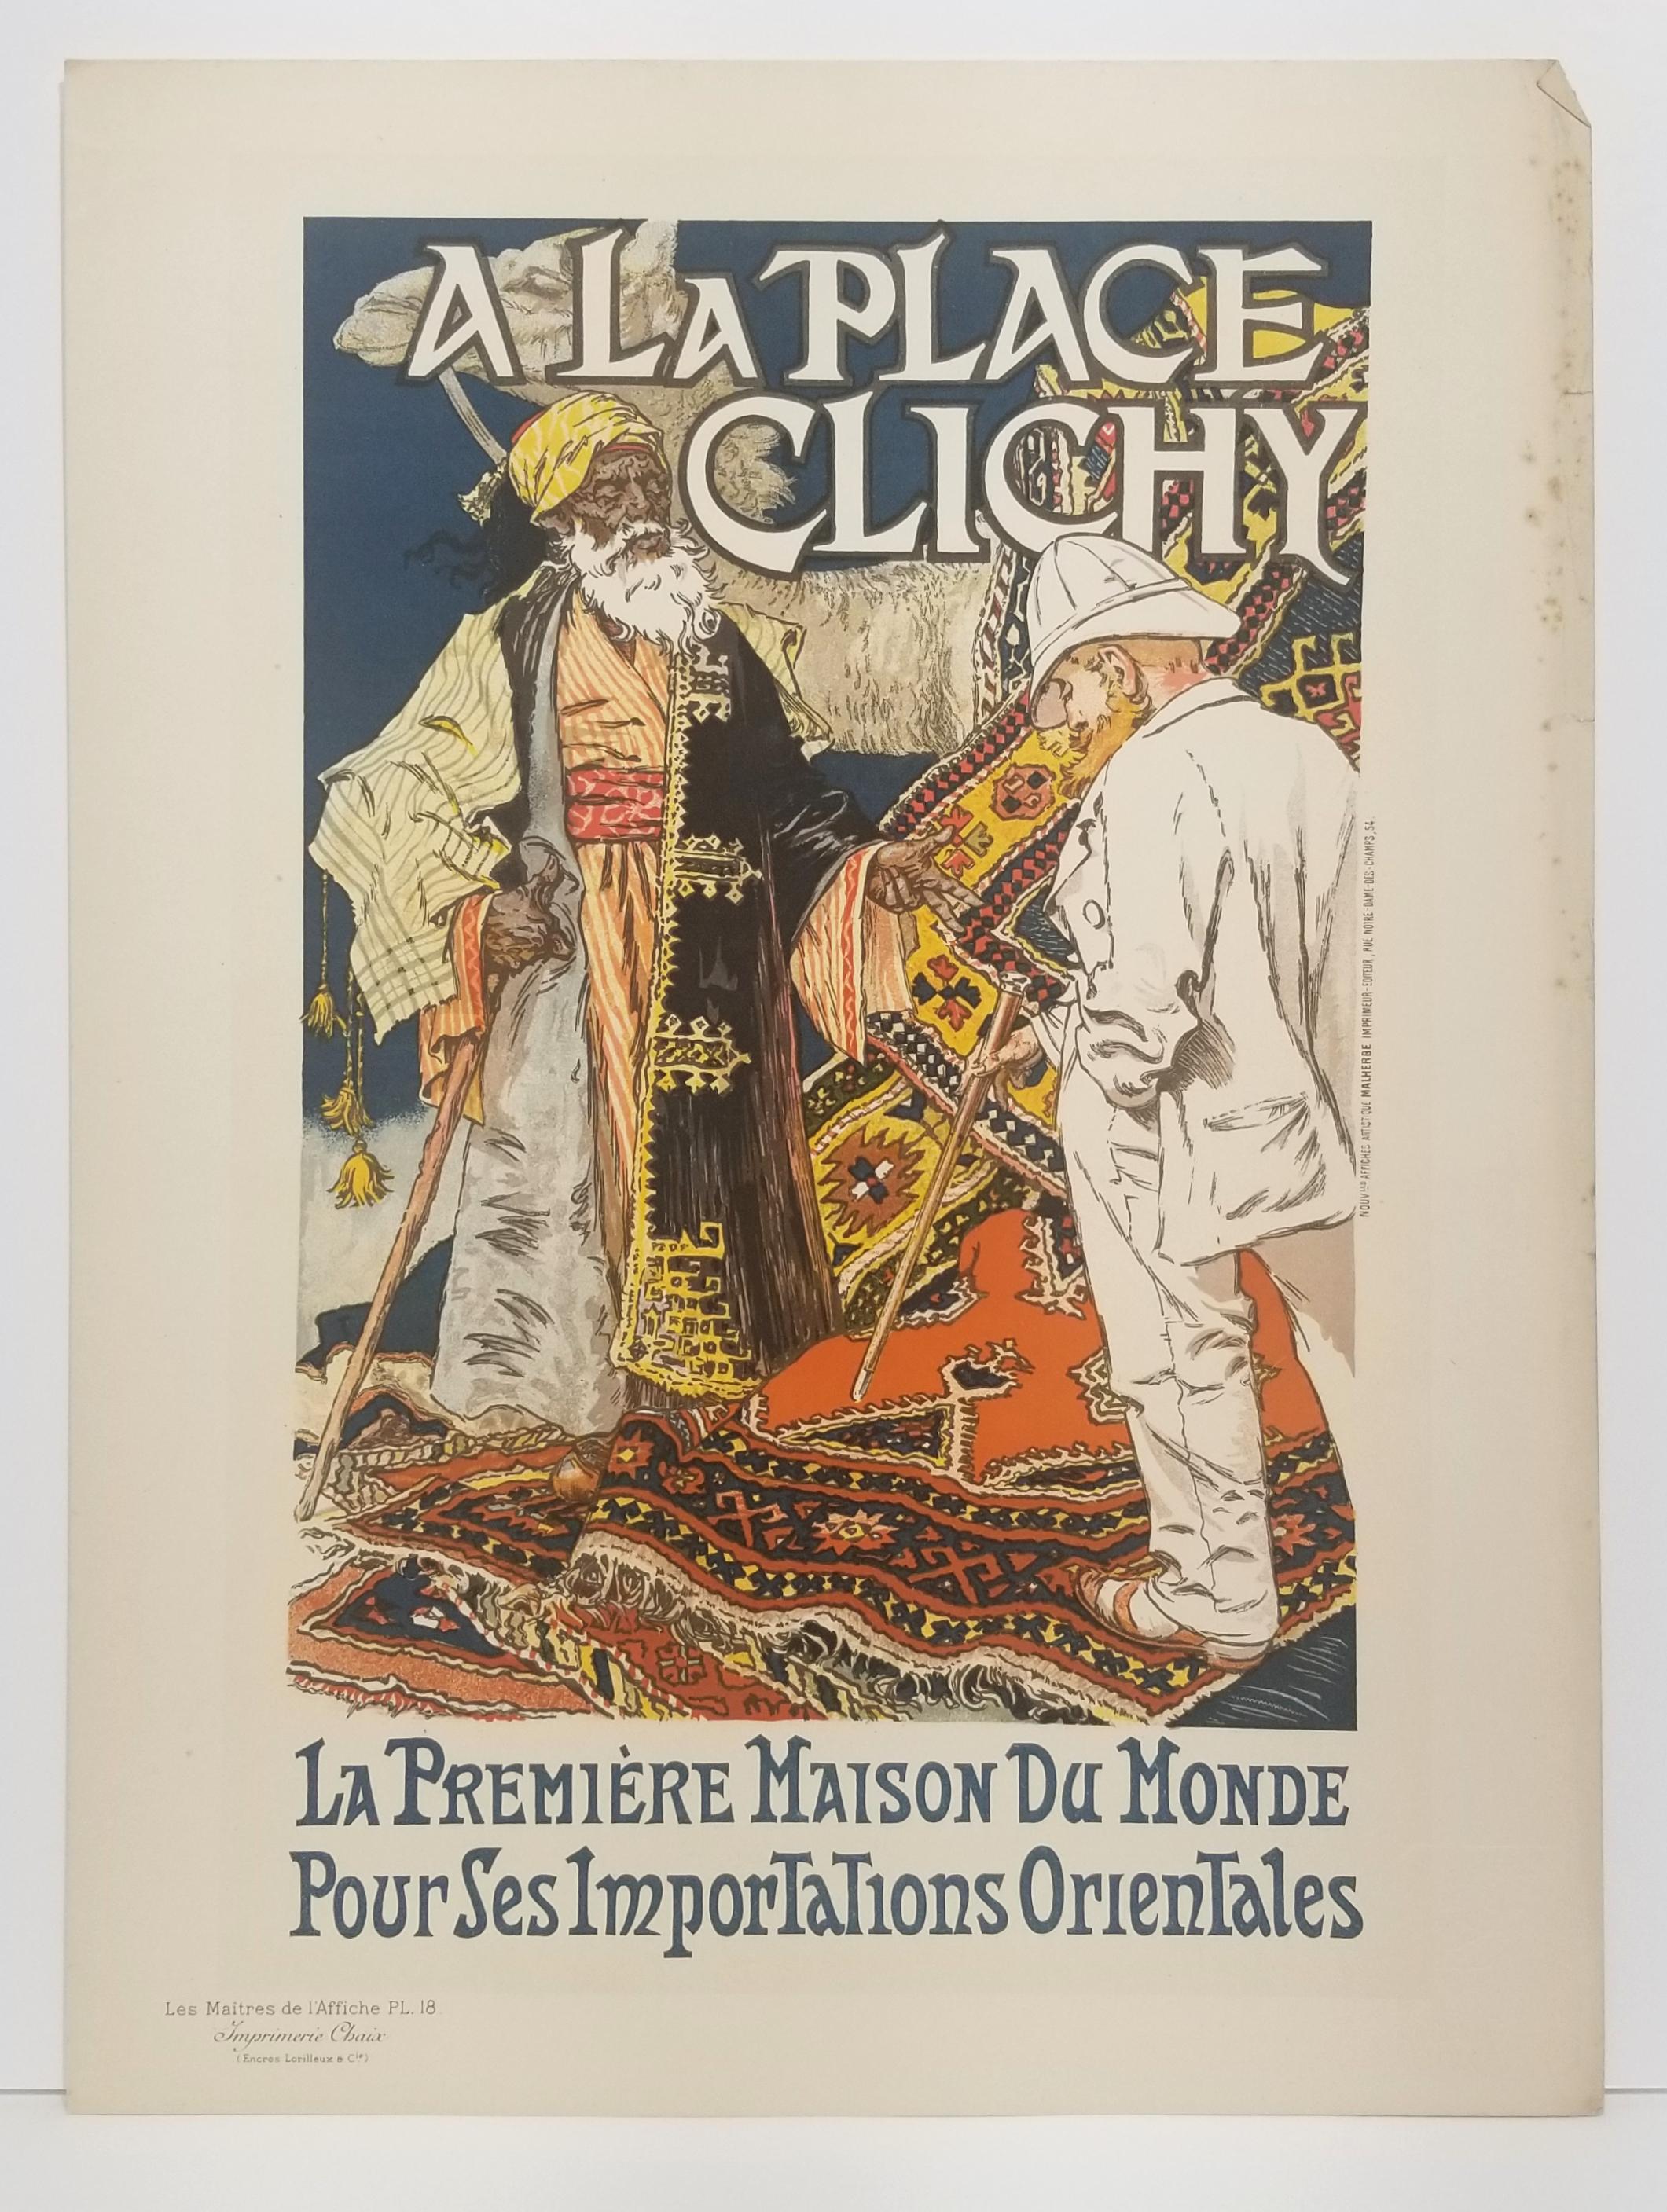 A la place Clichy - Print by Eugene Grasset